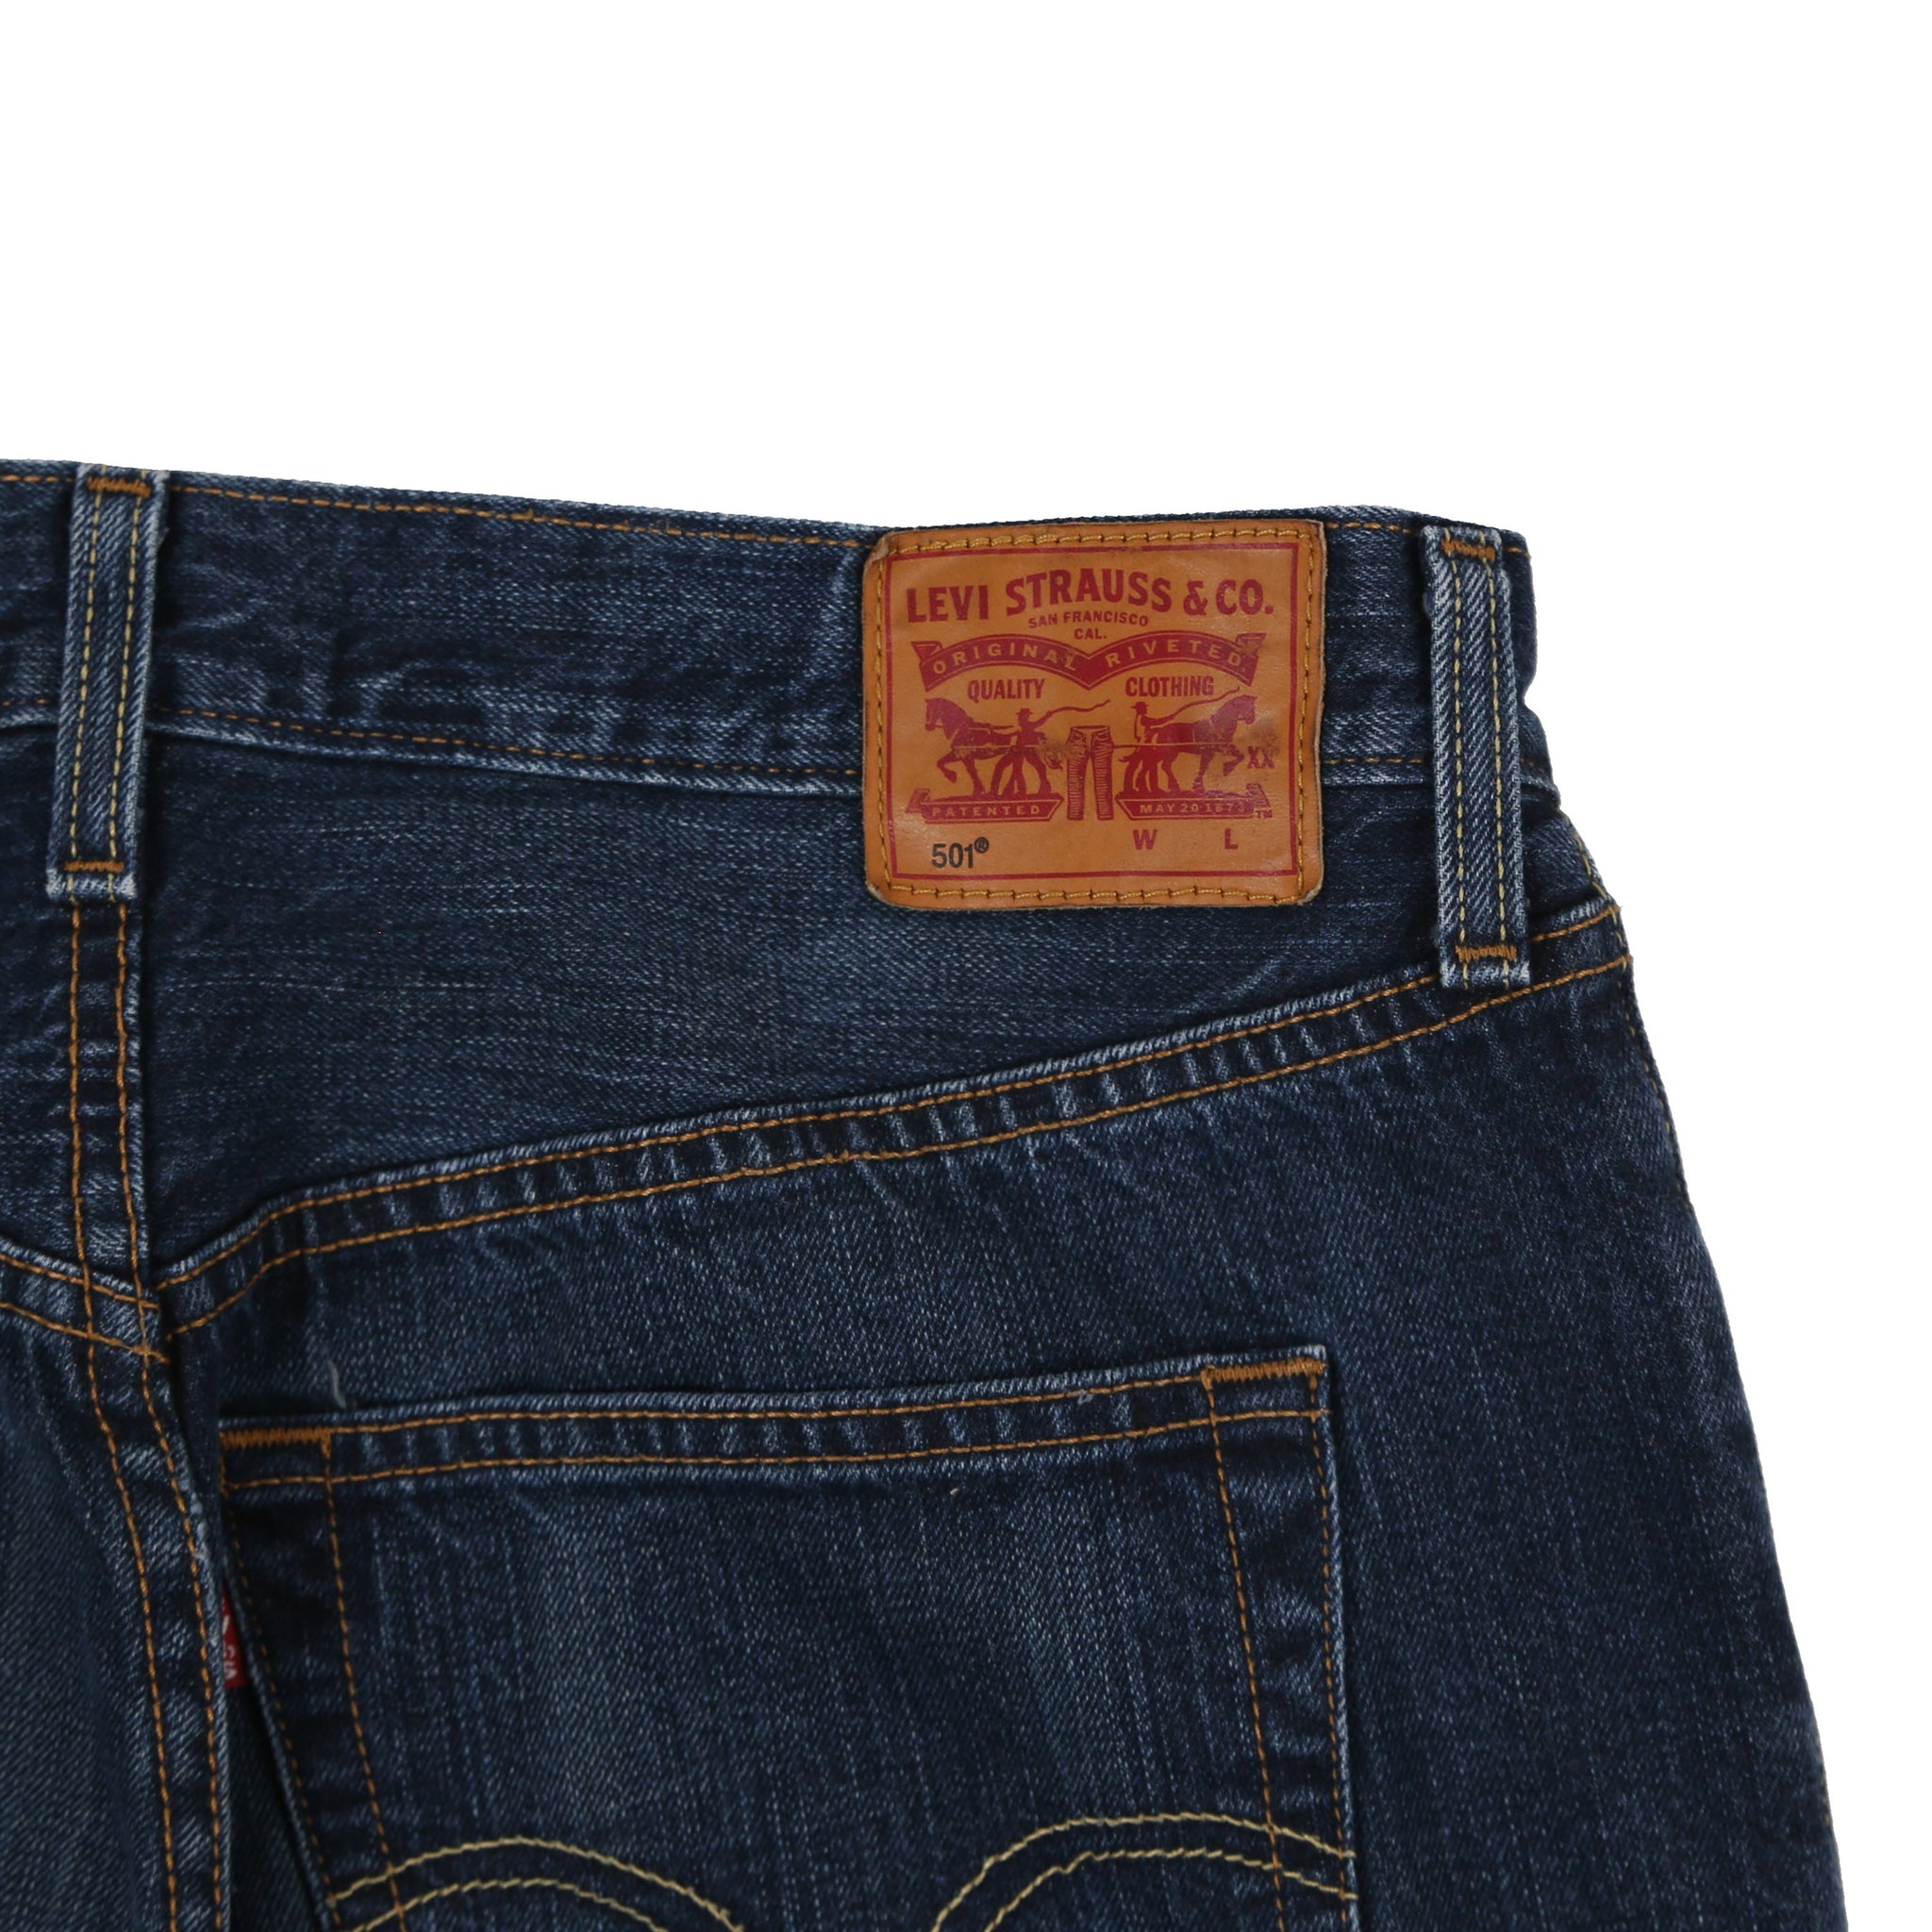 New Levis 501 Selvedge Denim Jeans